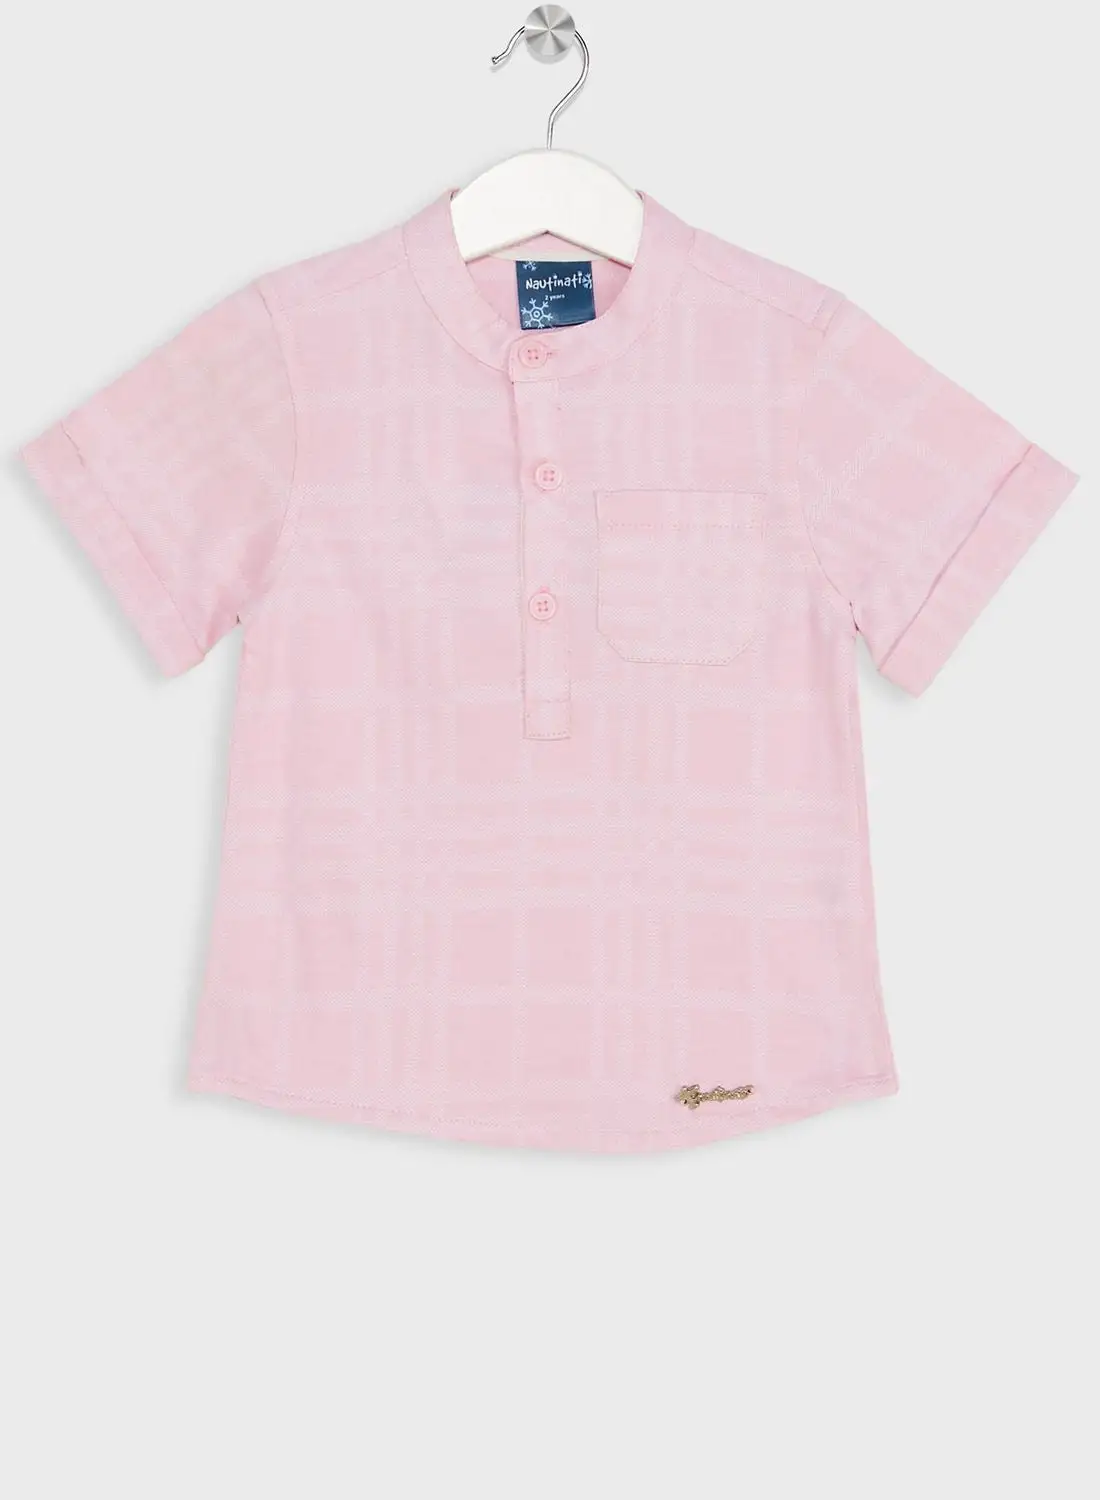 Nautinati Nauti Nati Boys قميص كاجوال غير شفاف باللون الوردي